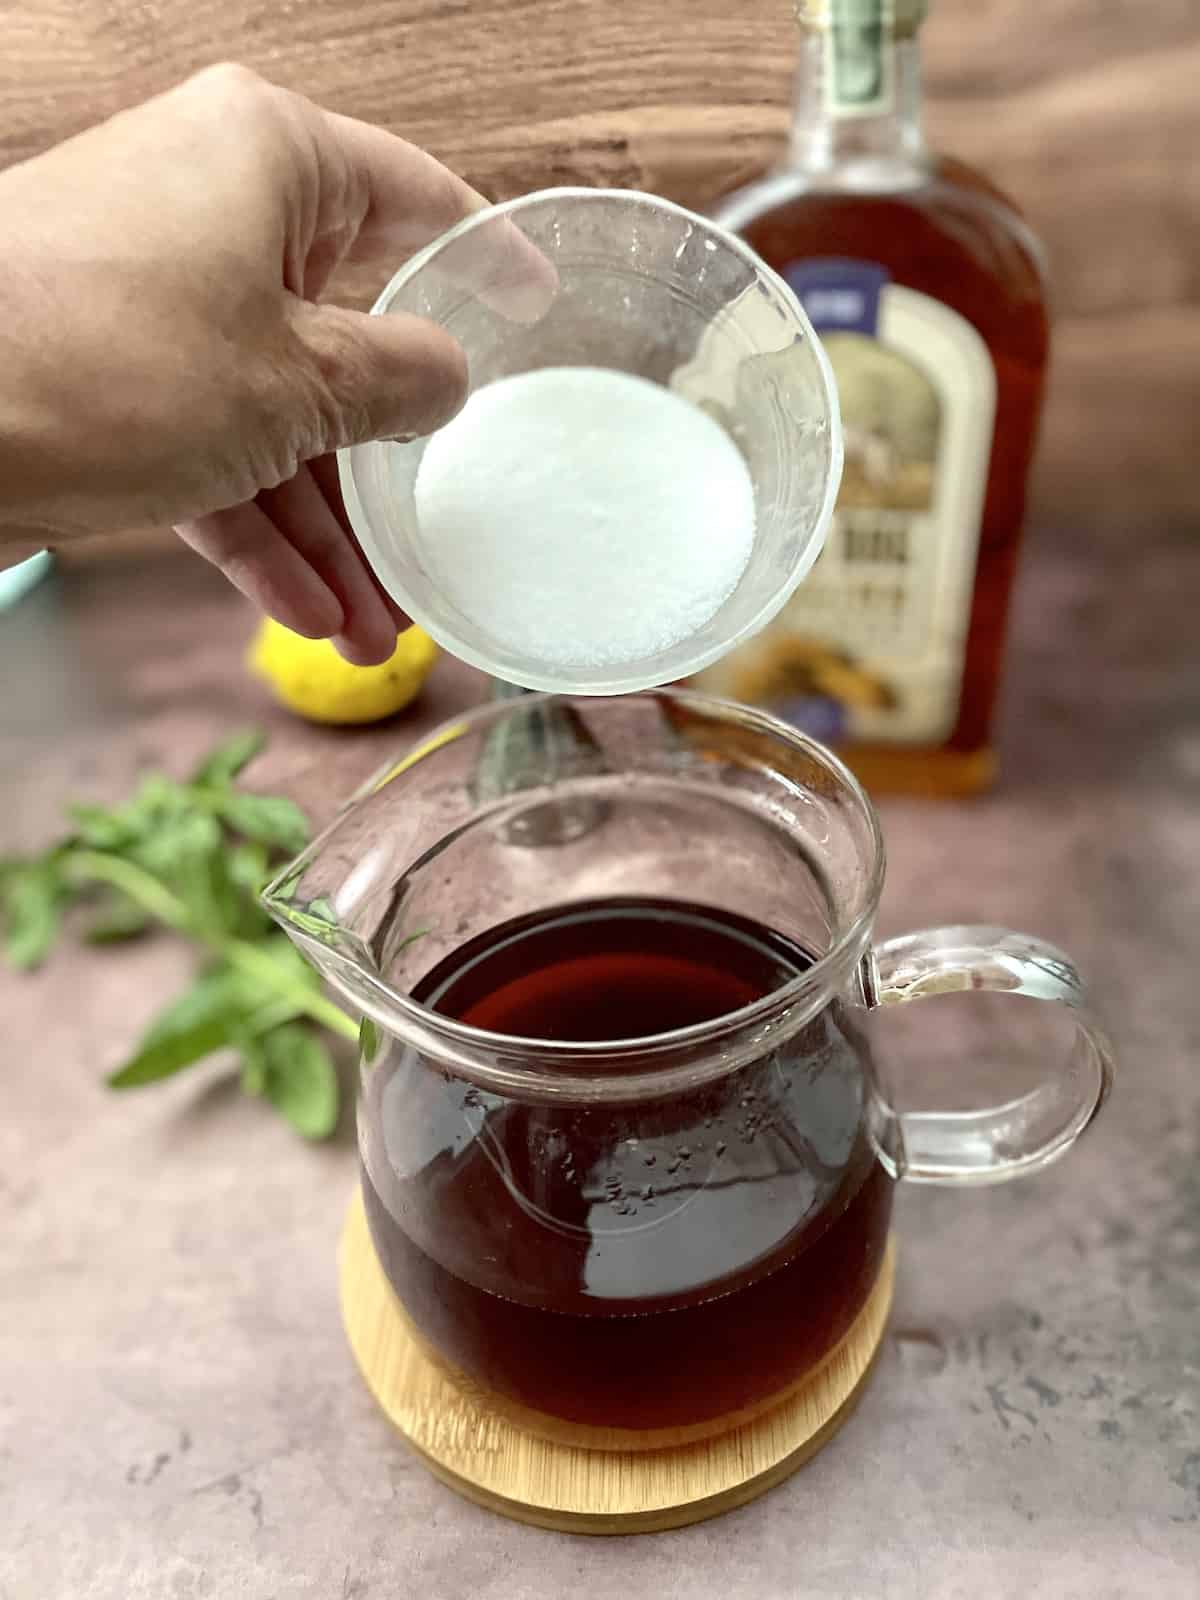 Adding sugar to pot of tea.